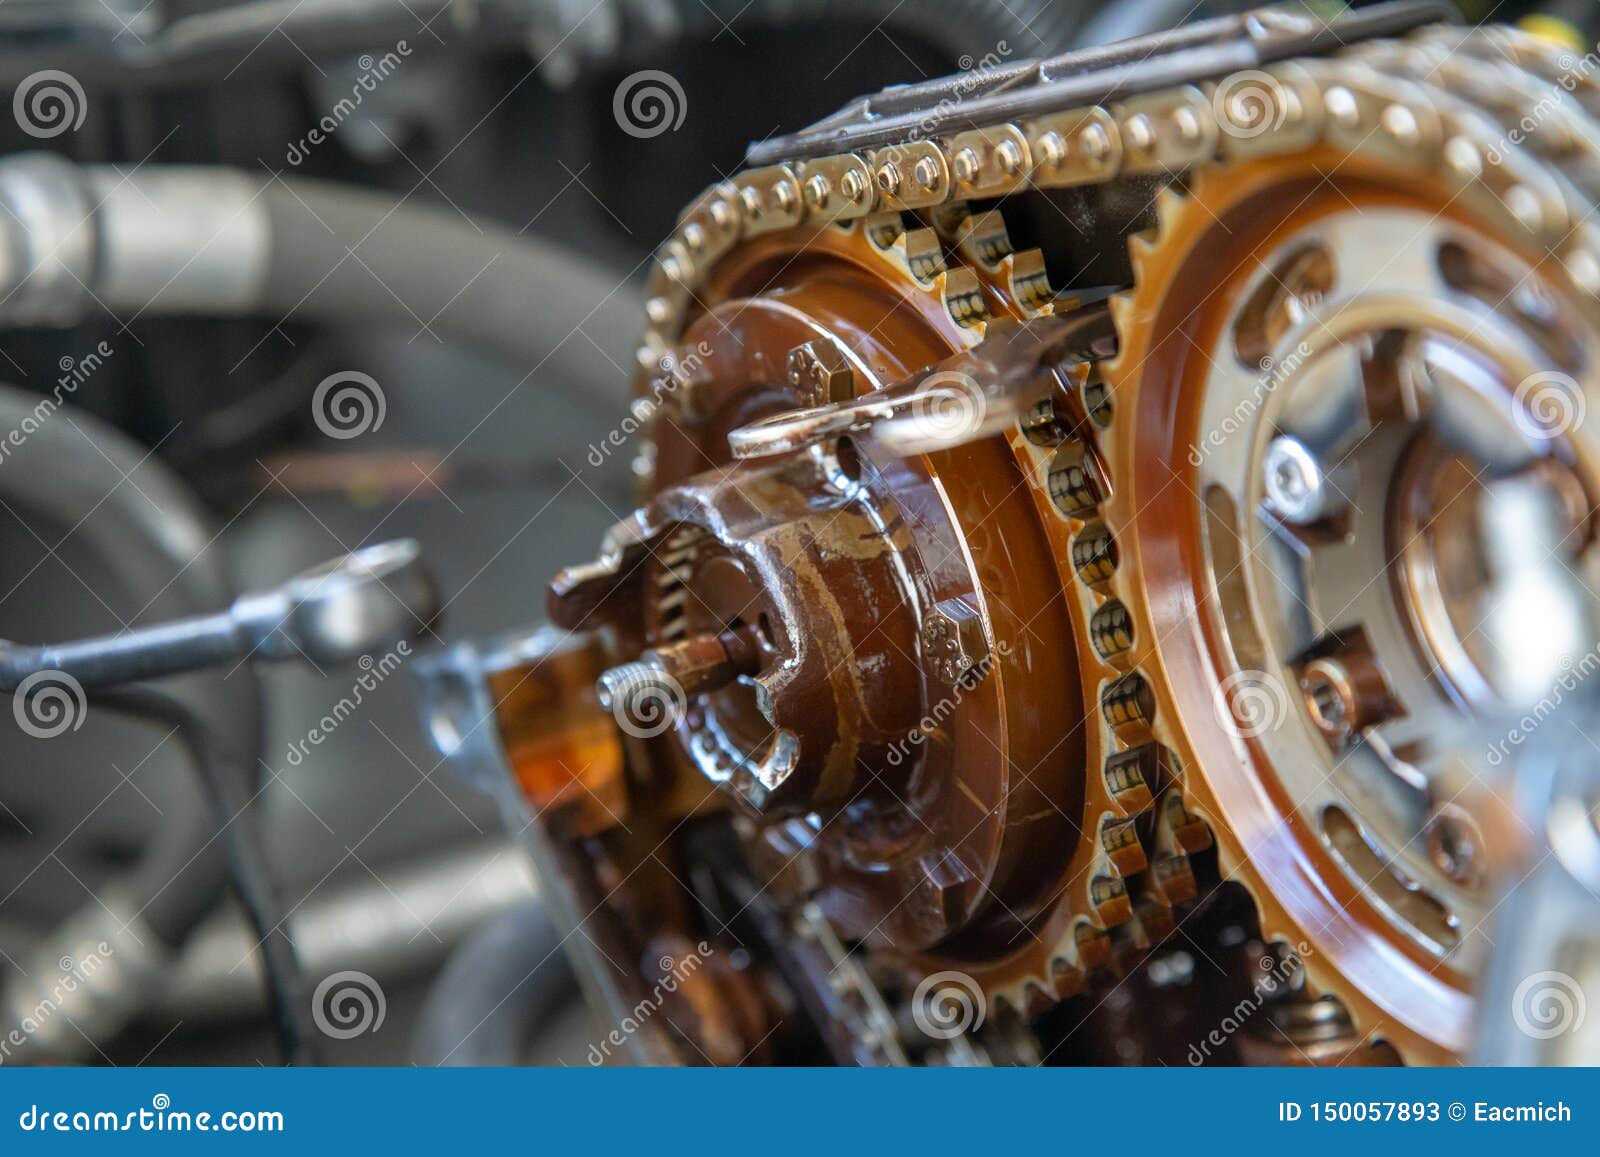 Closeup Of Car Timing Chain Stock Image - Image of metallic, engine